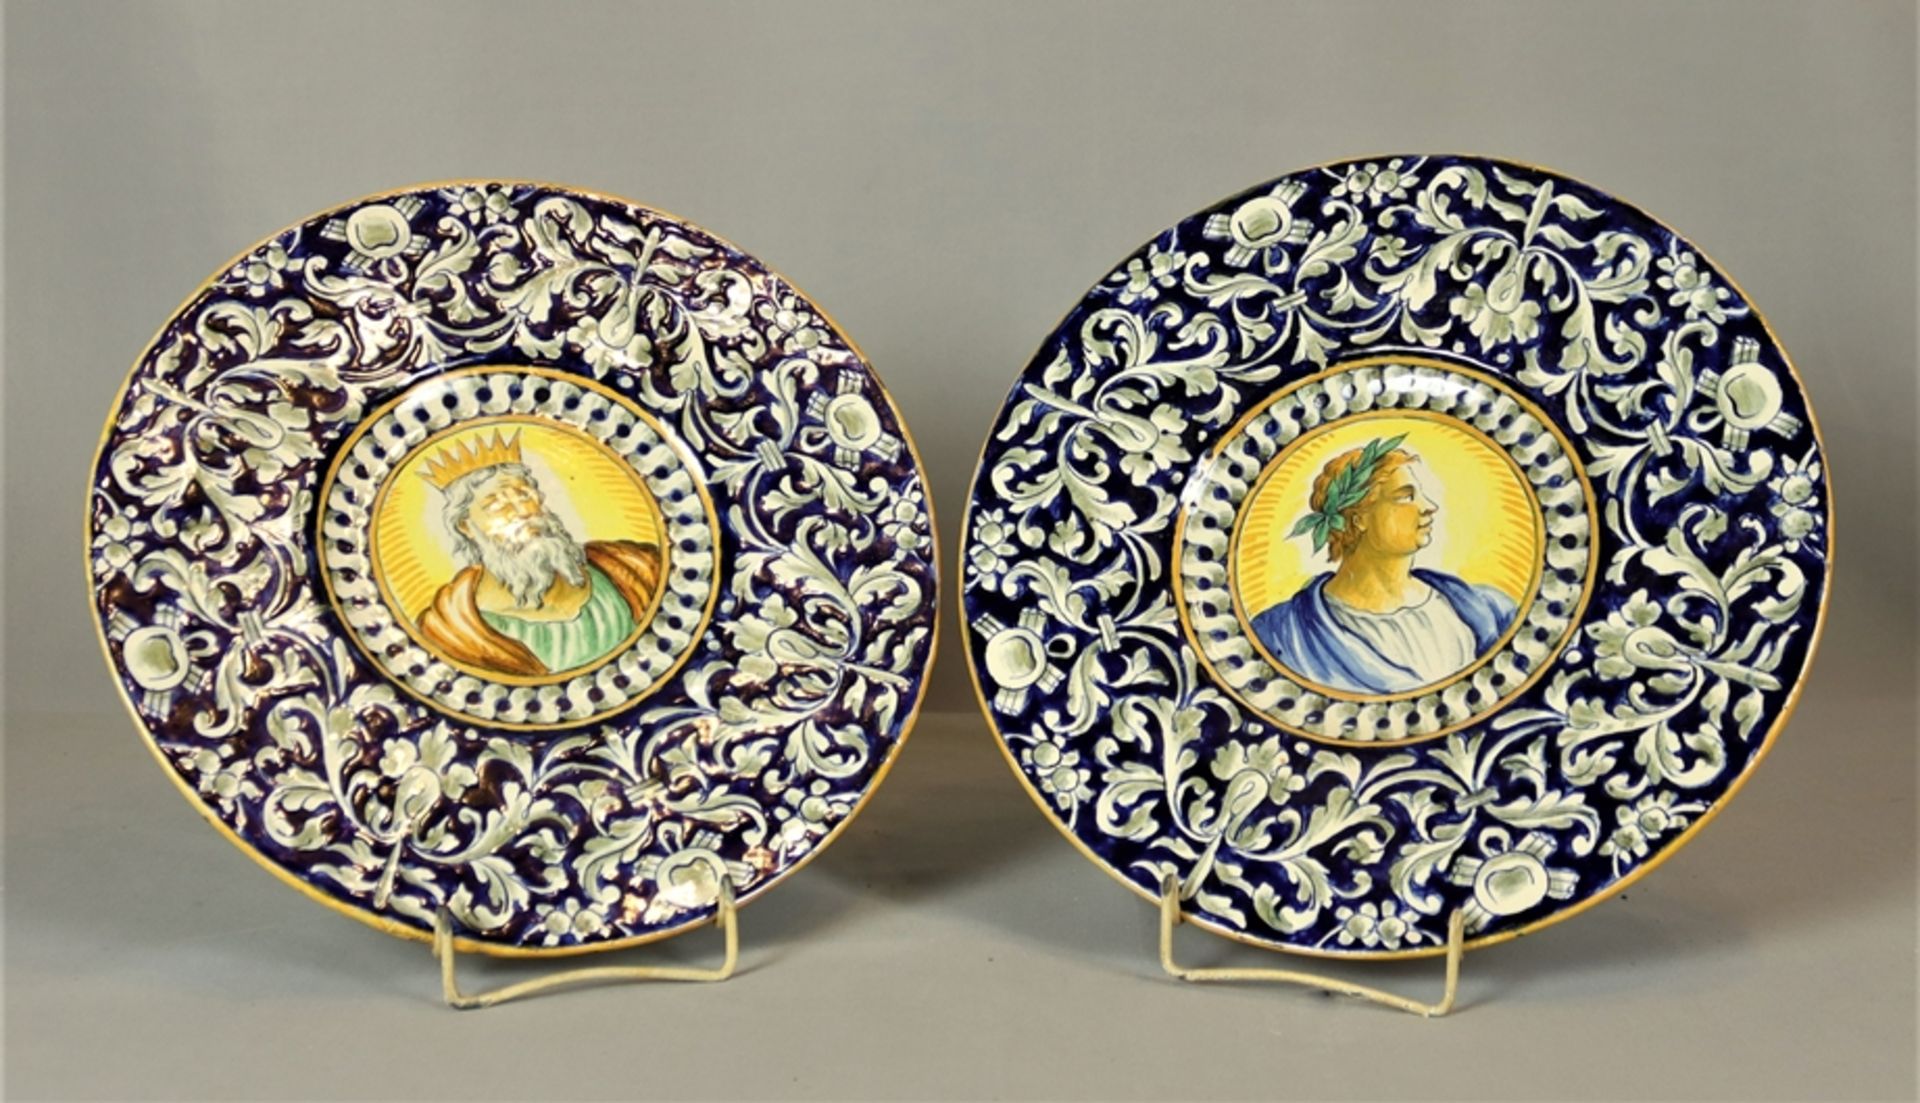 Paar Italienische Majolika Teller des 17.-18. Jh., heller Scherben, farbig gestaltet, im Spiegel fe